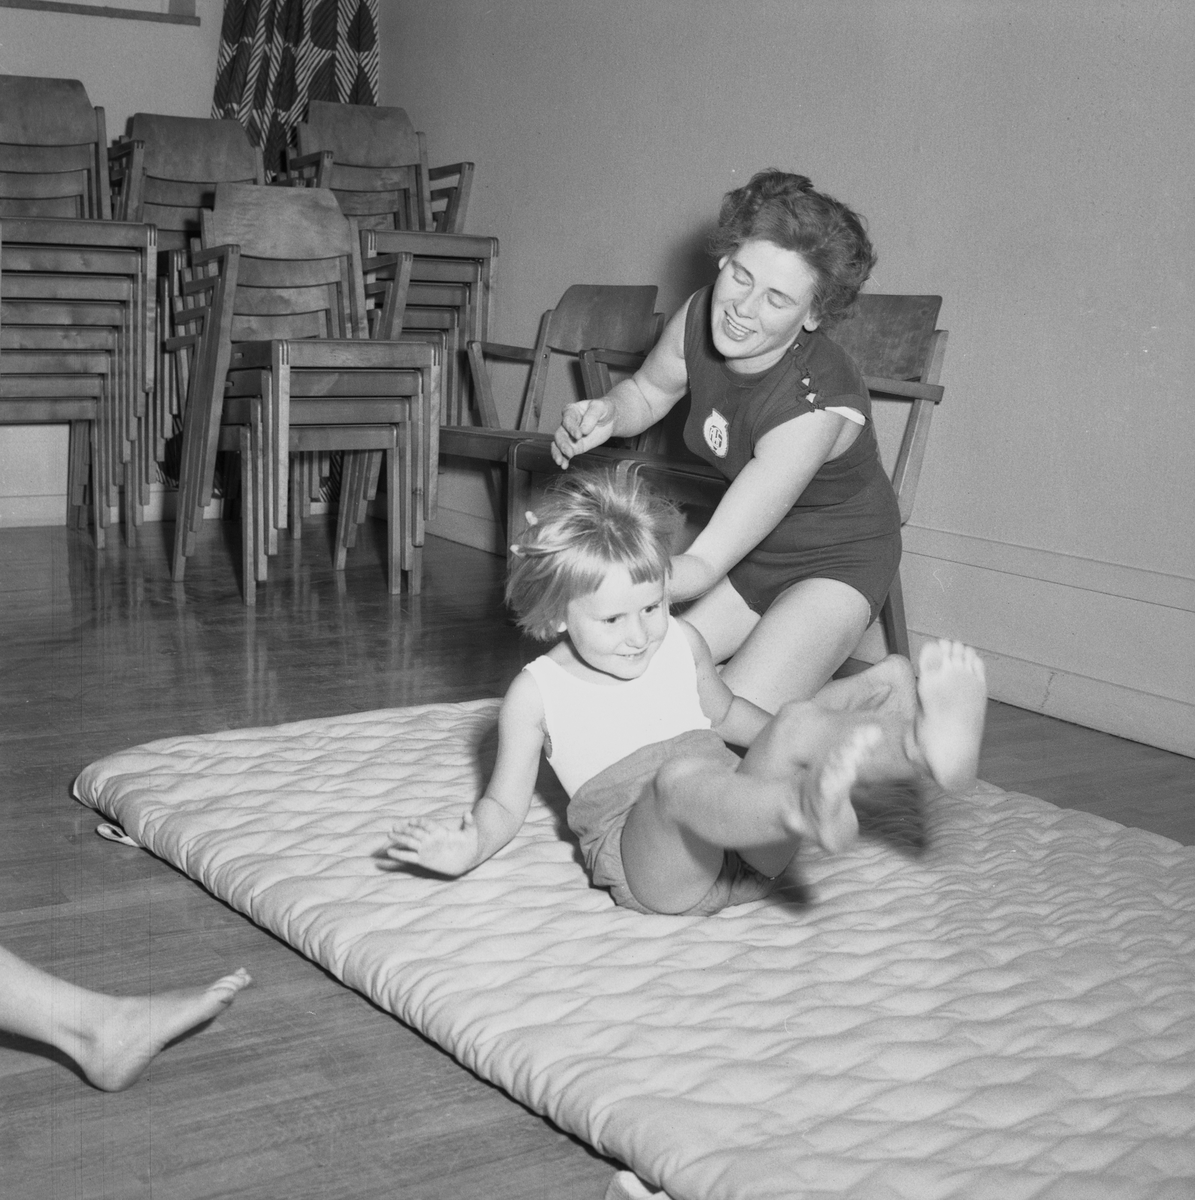 Barngymnastik.
23 september 1955.